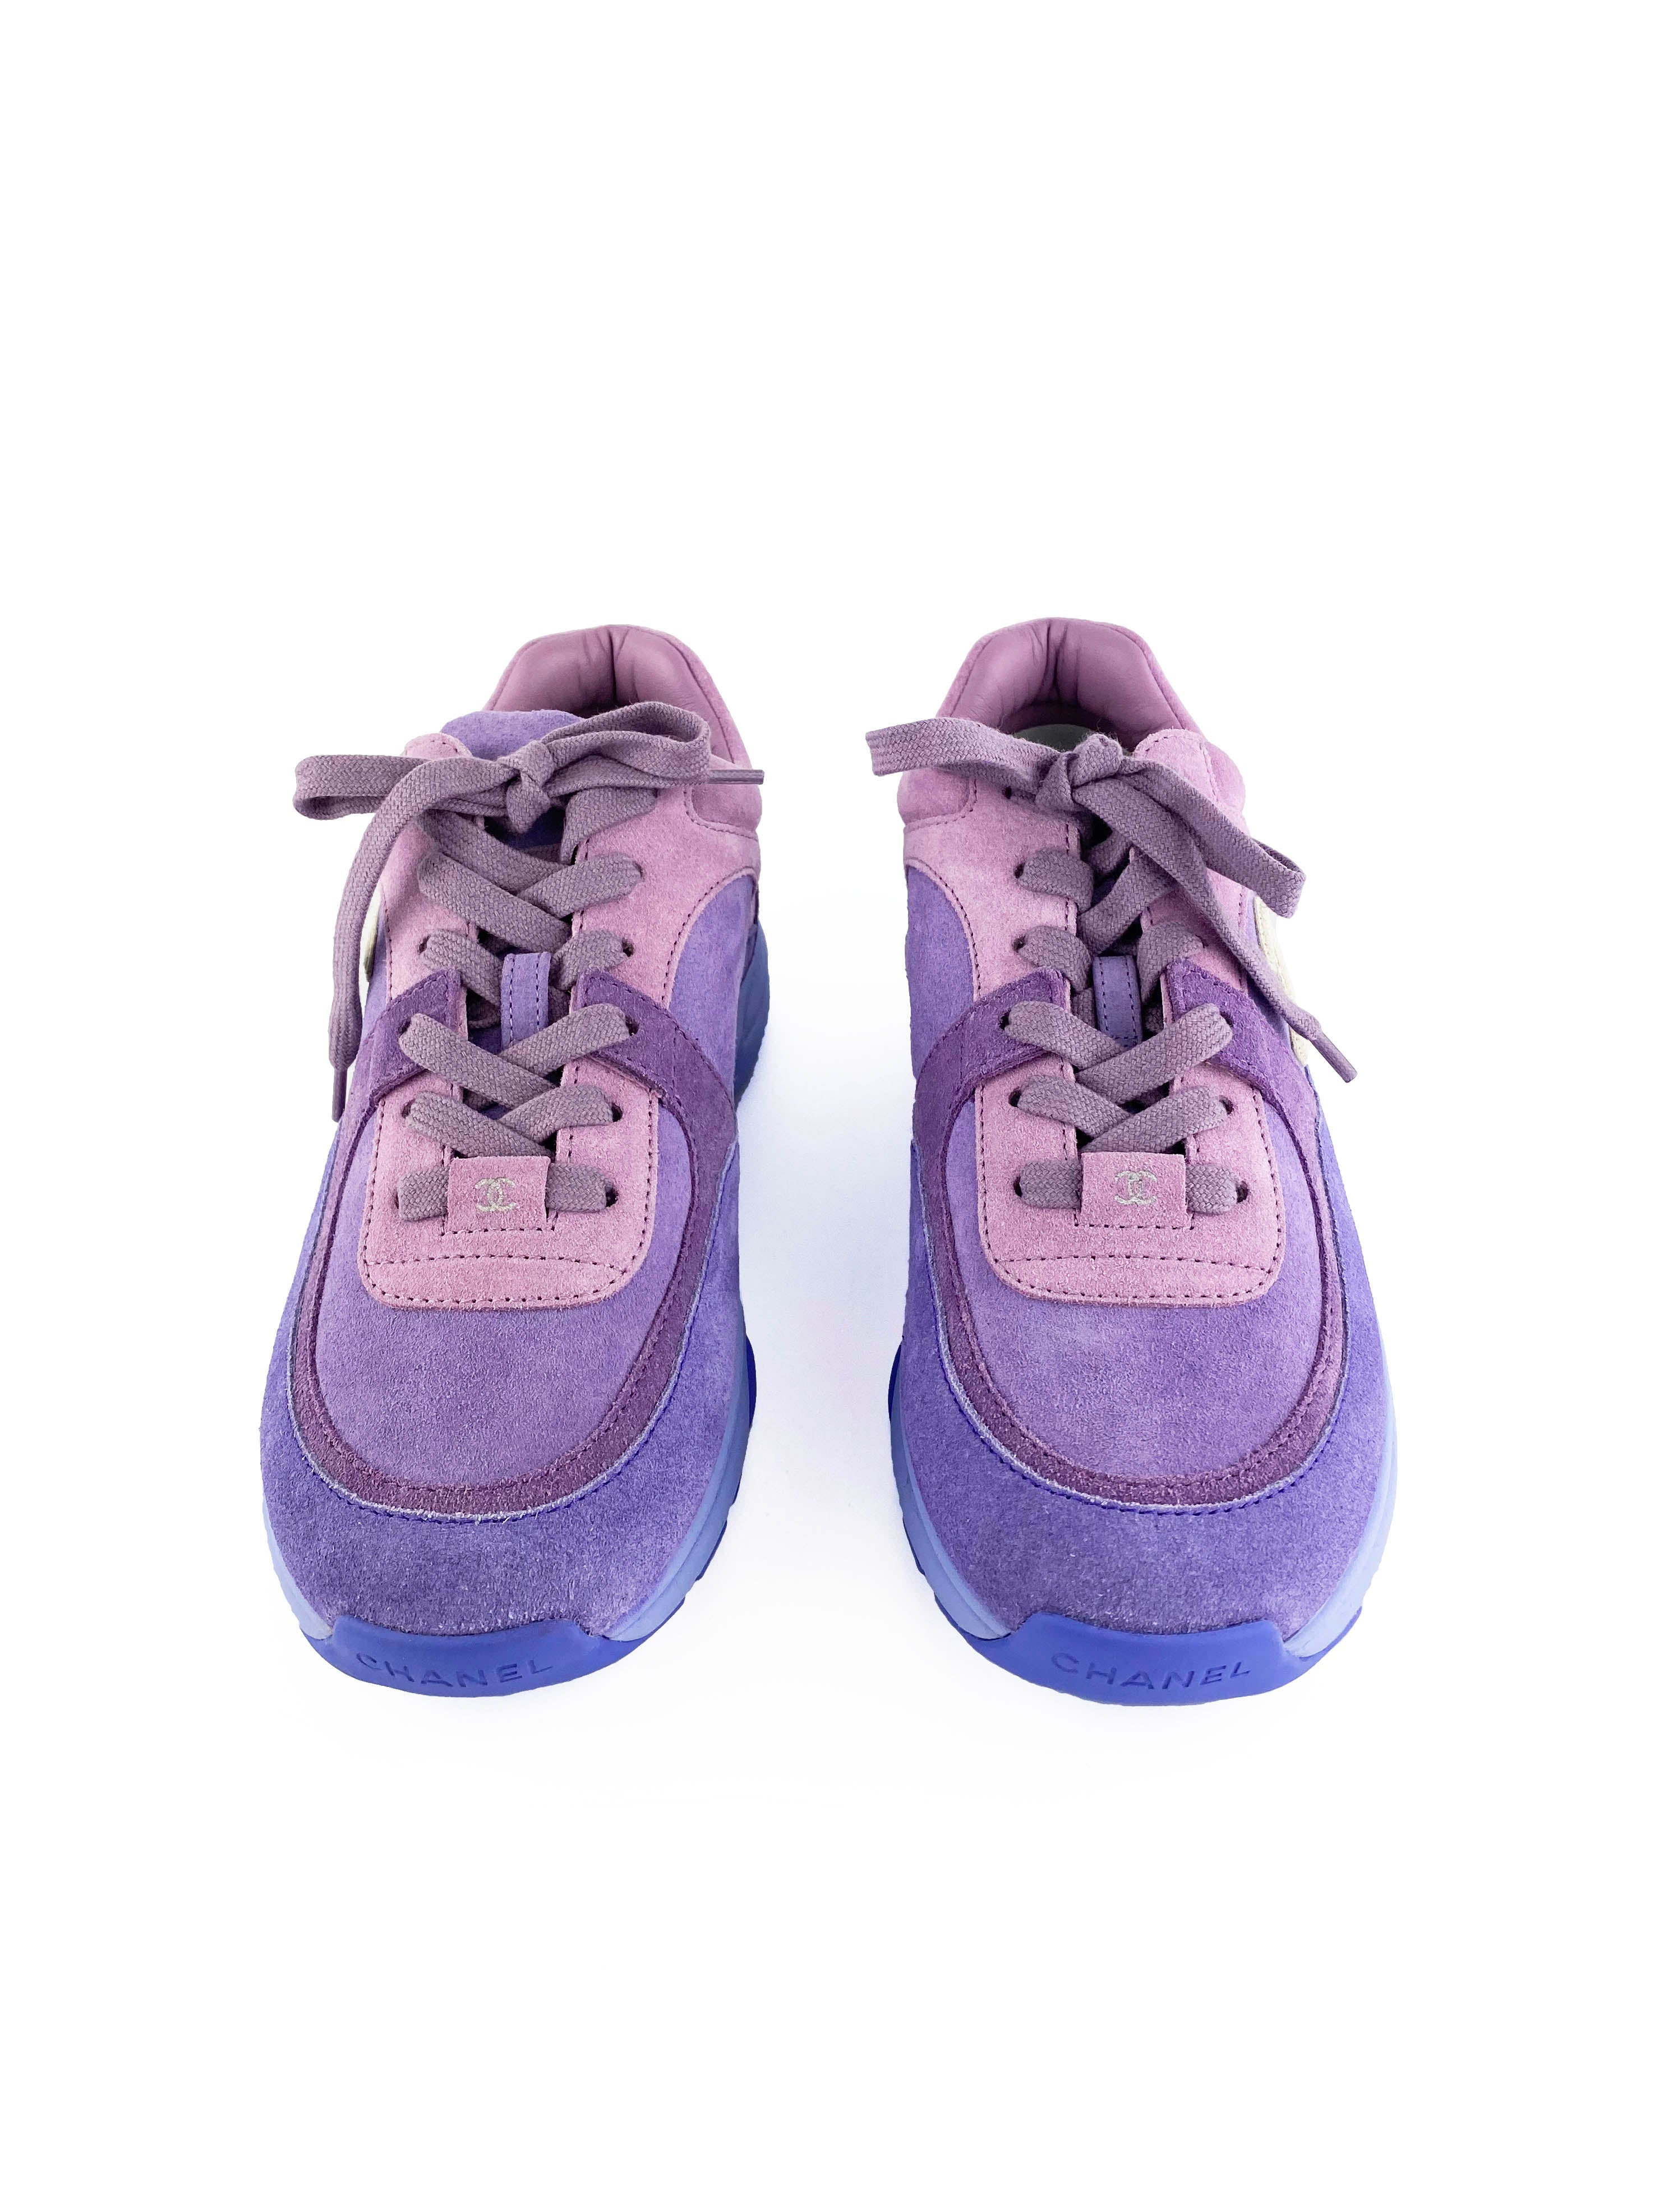 chanel-purple-suede-sneakers-4.jpg